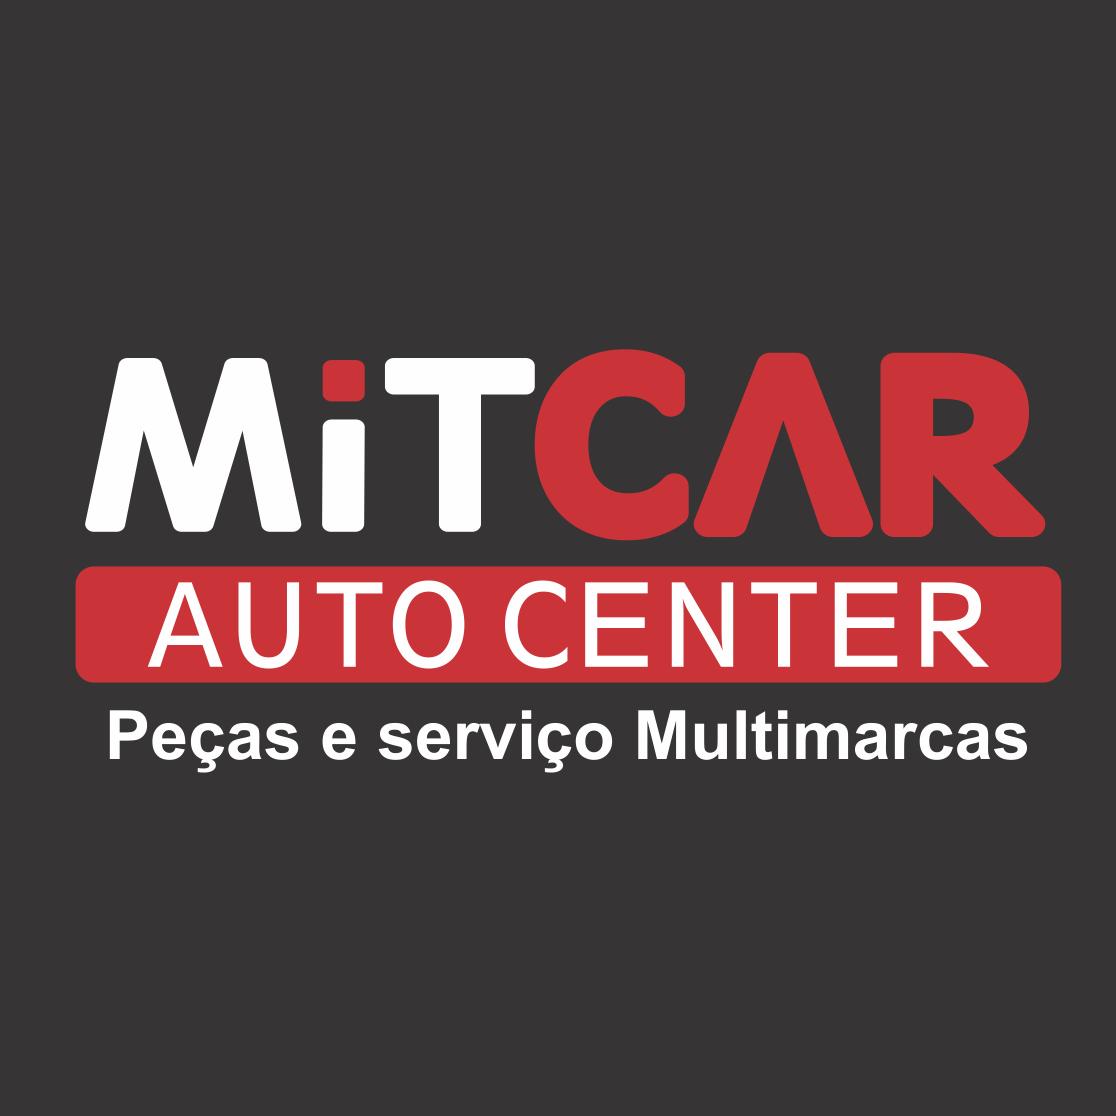 Mitcar Auto Center